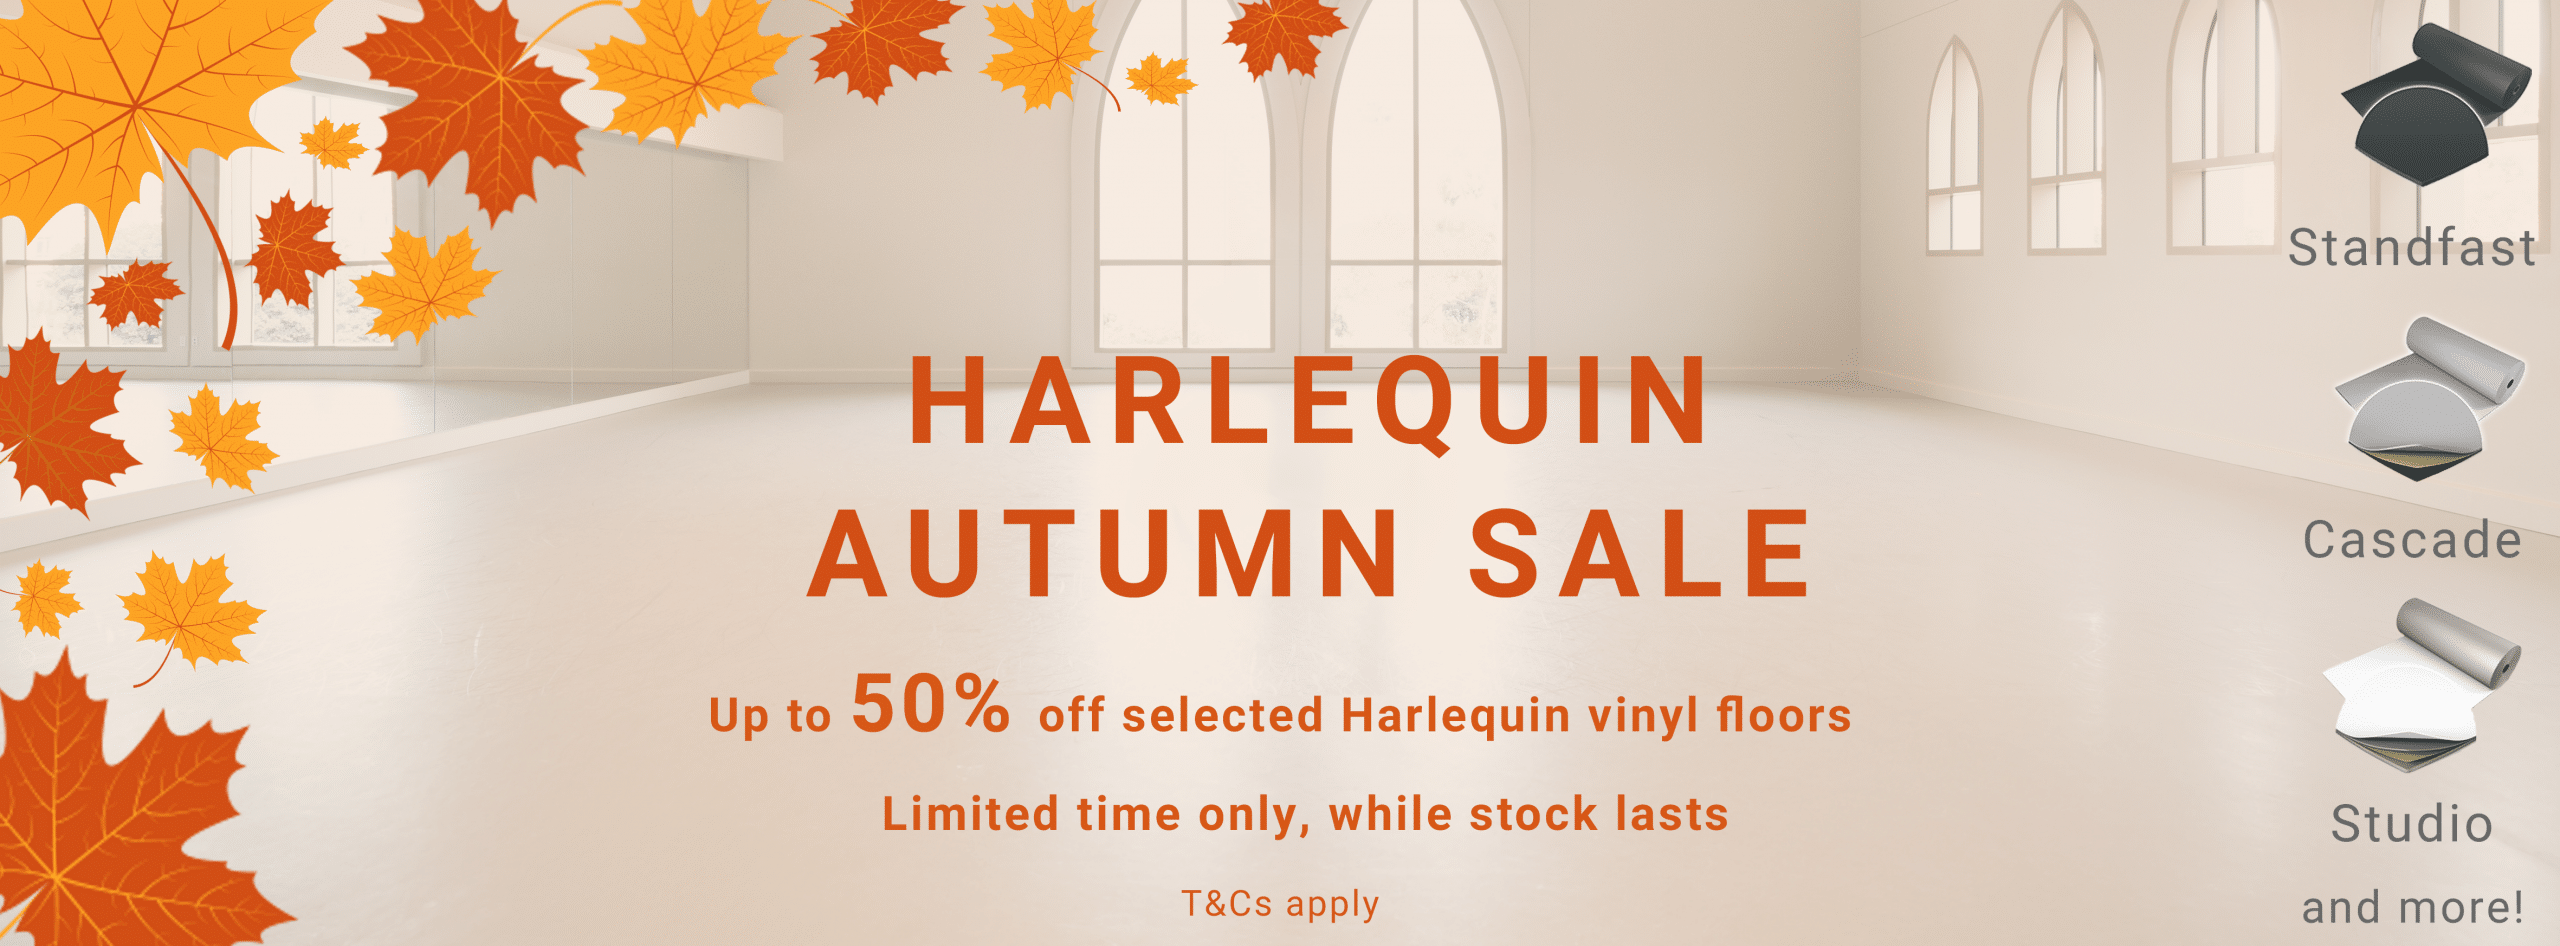 Harlequin Autumn Sale: Get Up to 50% Off on Premium Dance and Theatre Vinyl Floors